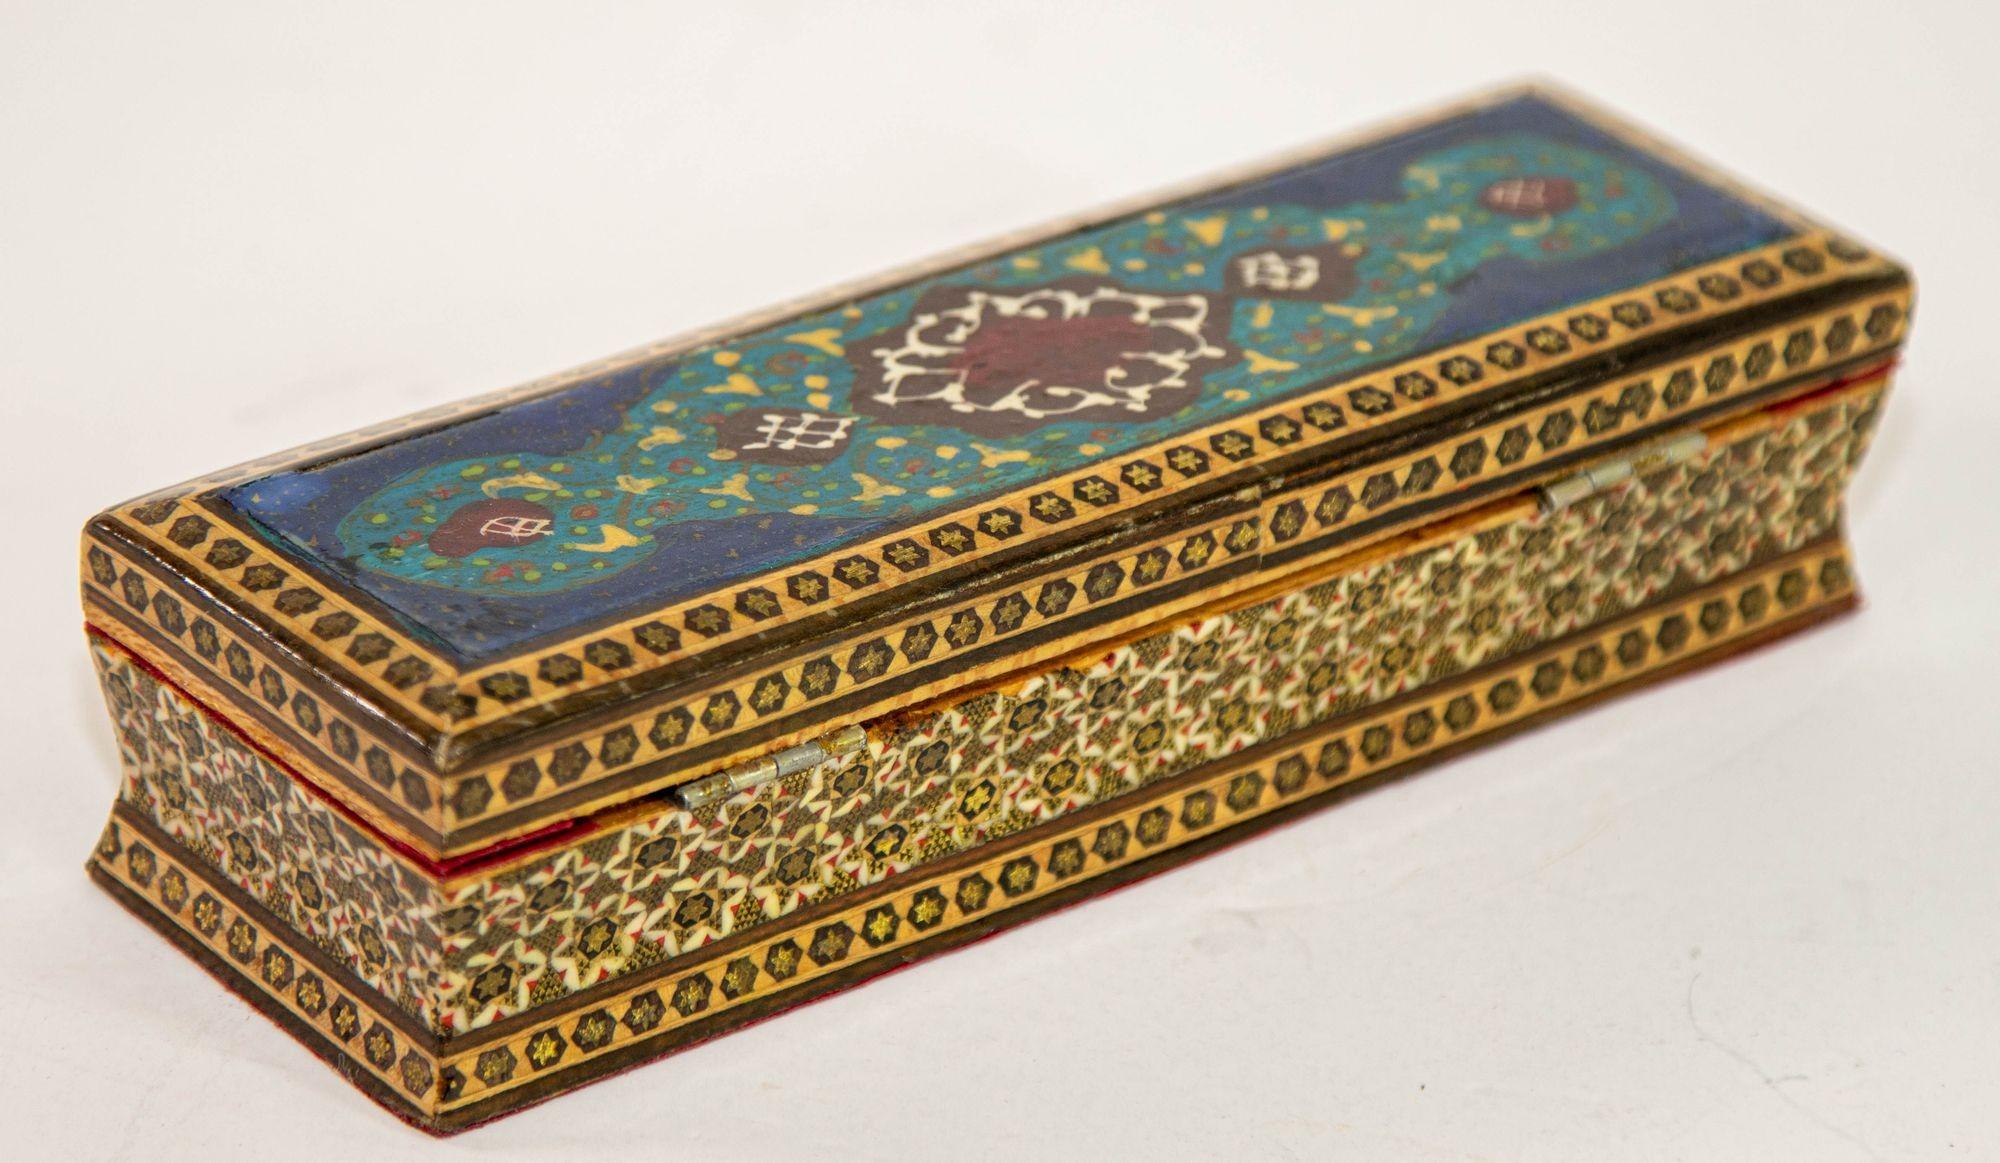 Micro Mosaic Persian Islamic Moorish Inlaid Jewelry Pen Box.
1950s Middle Eastern Moorish Inlaid Jewelry Trinket Mosaic Box.
Handcrafted marquetry Moorish wood inlay micro mosaic with miniature hand painted top.
Handcrafted marquetry Middle Eastern